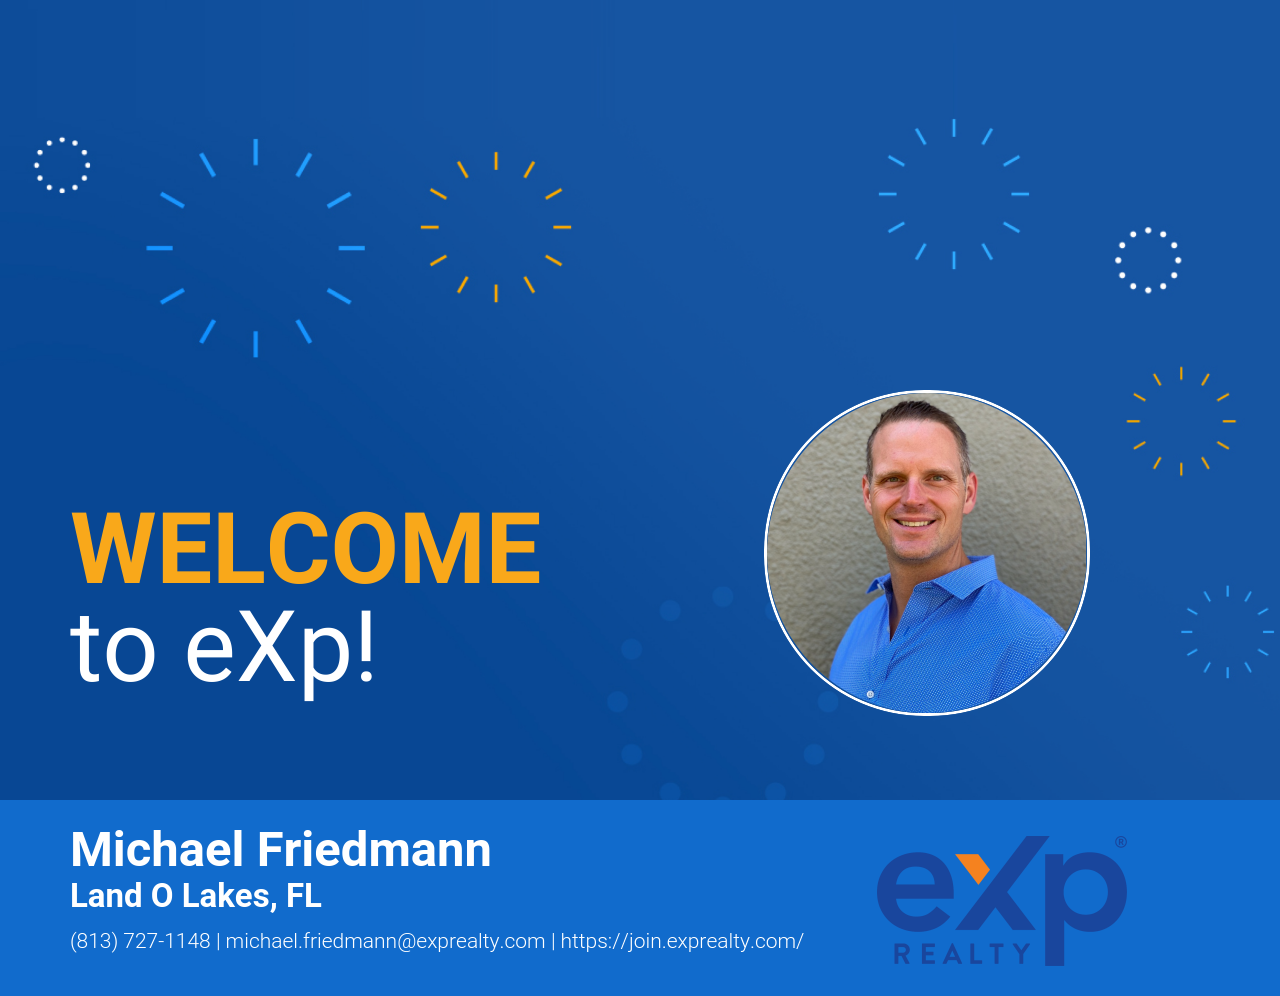 Michael Friedmann Joined eXp Realty!